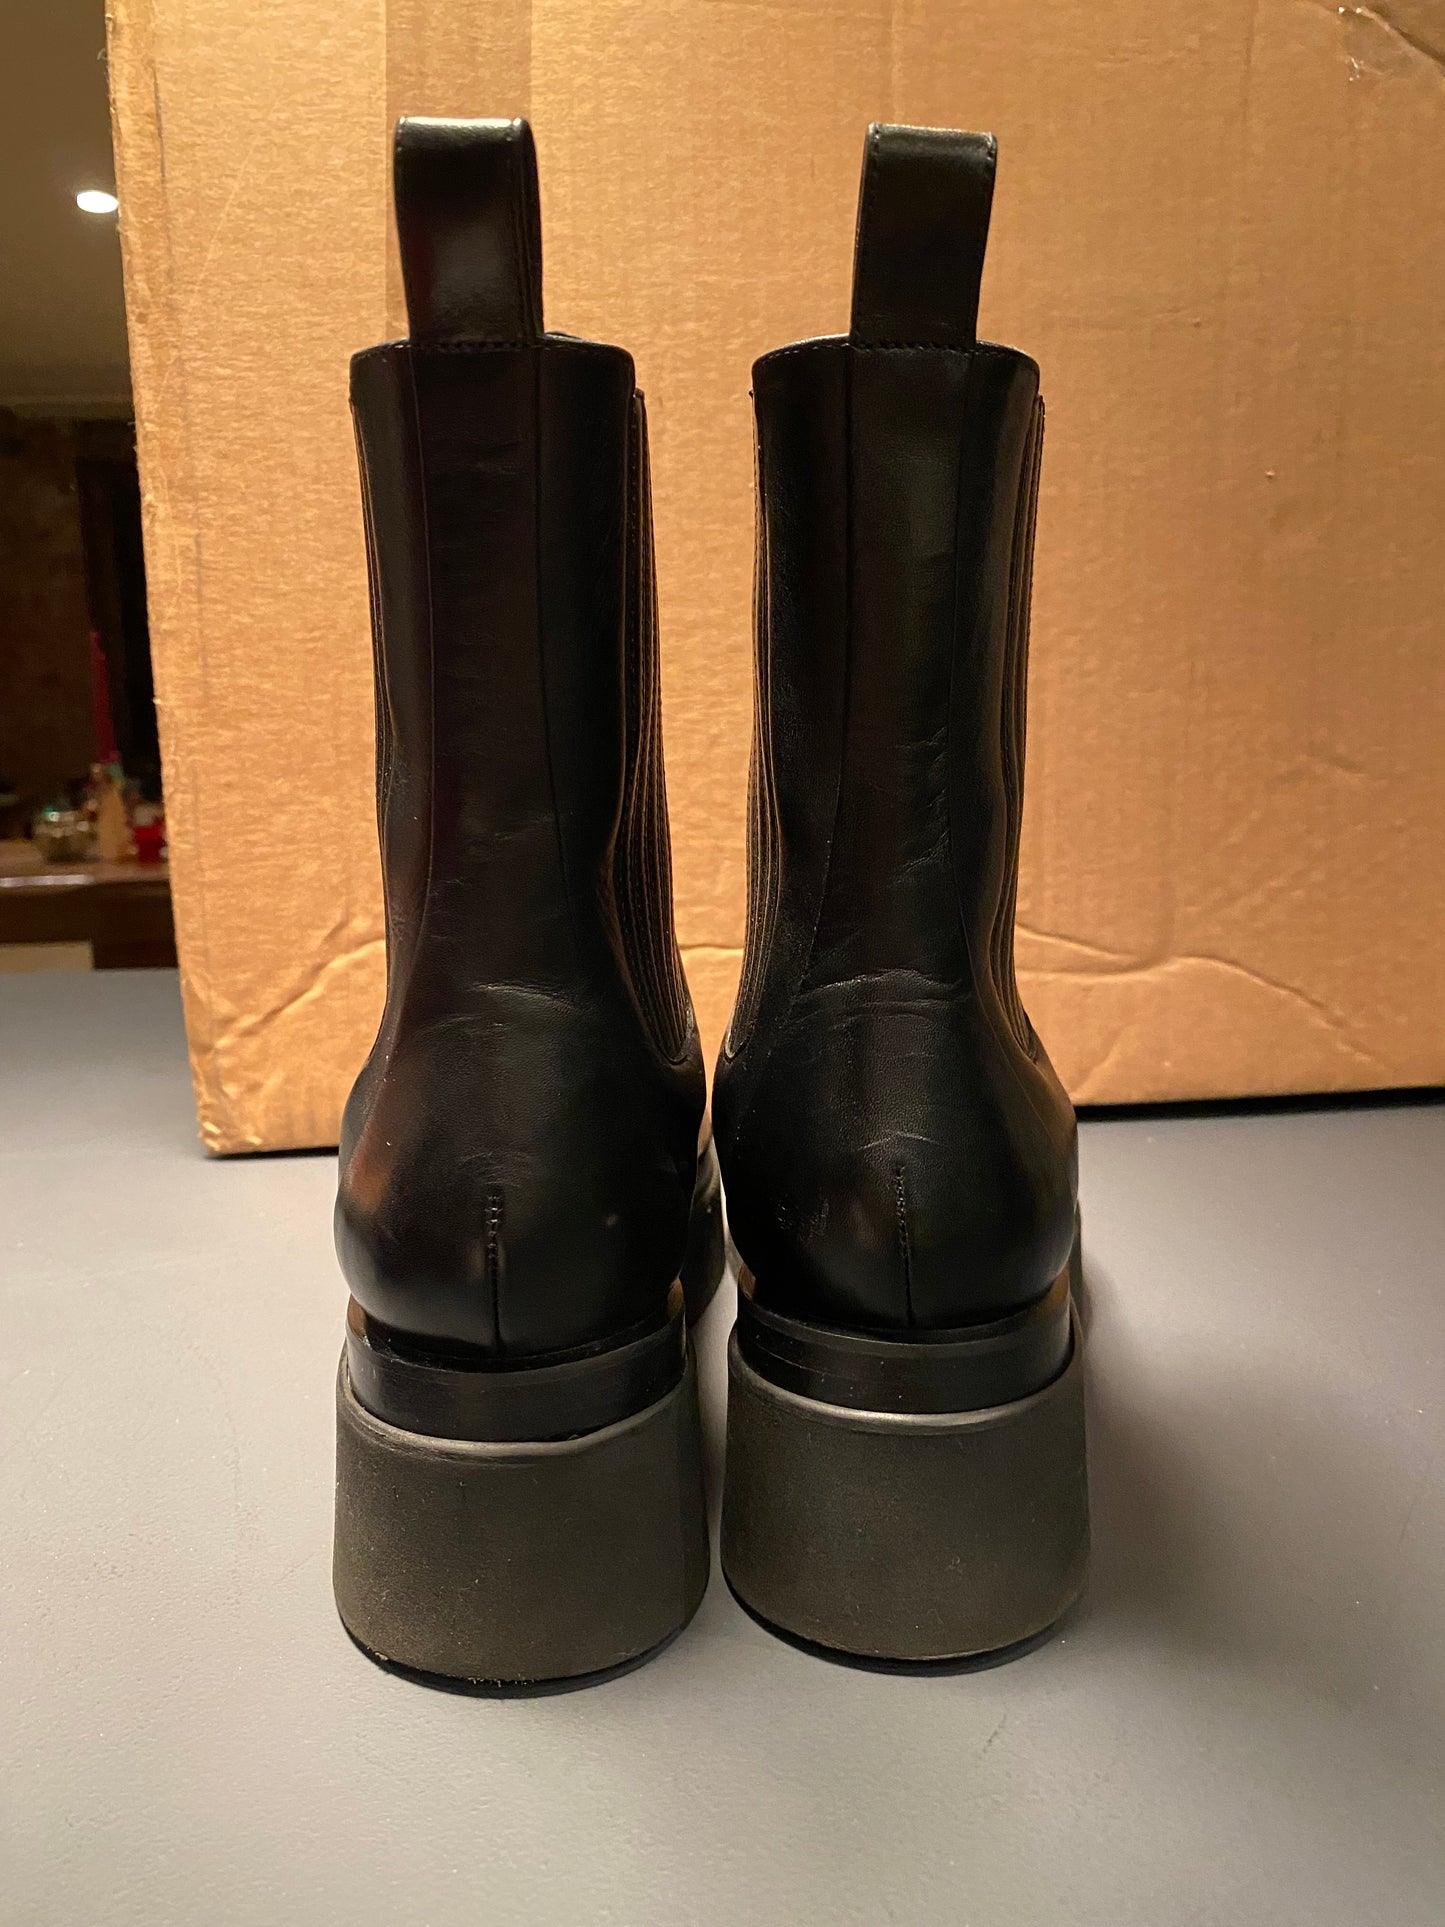 Clash Black Boots - 8.5